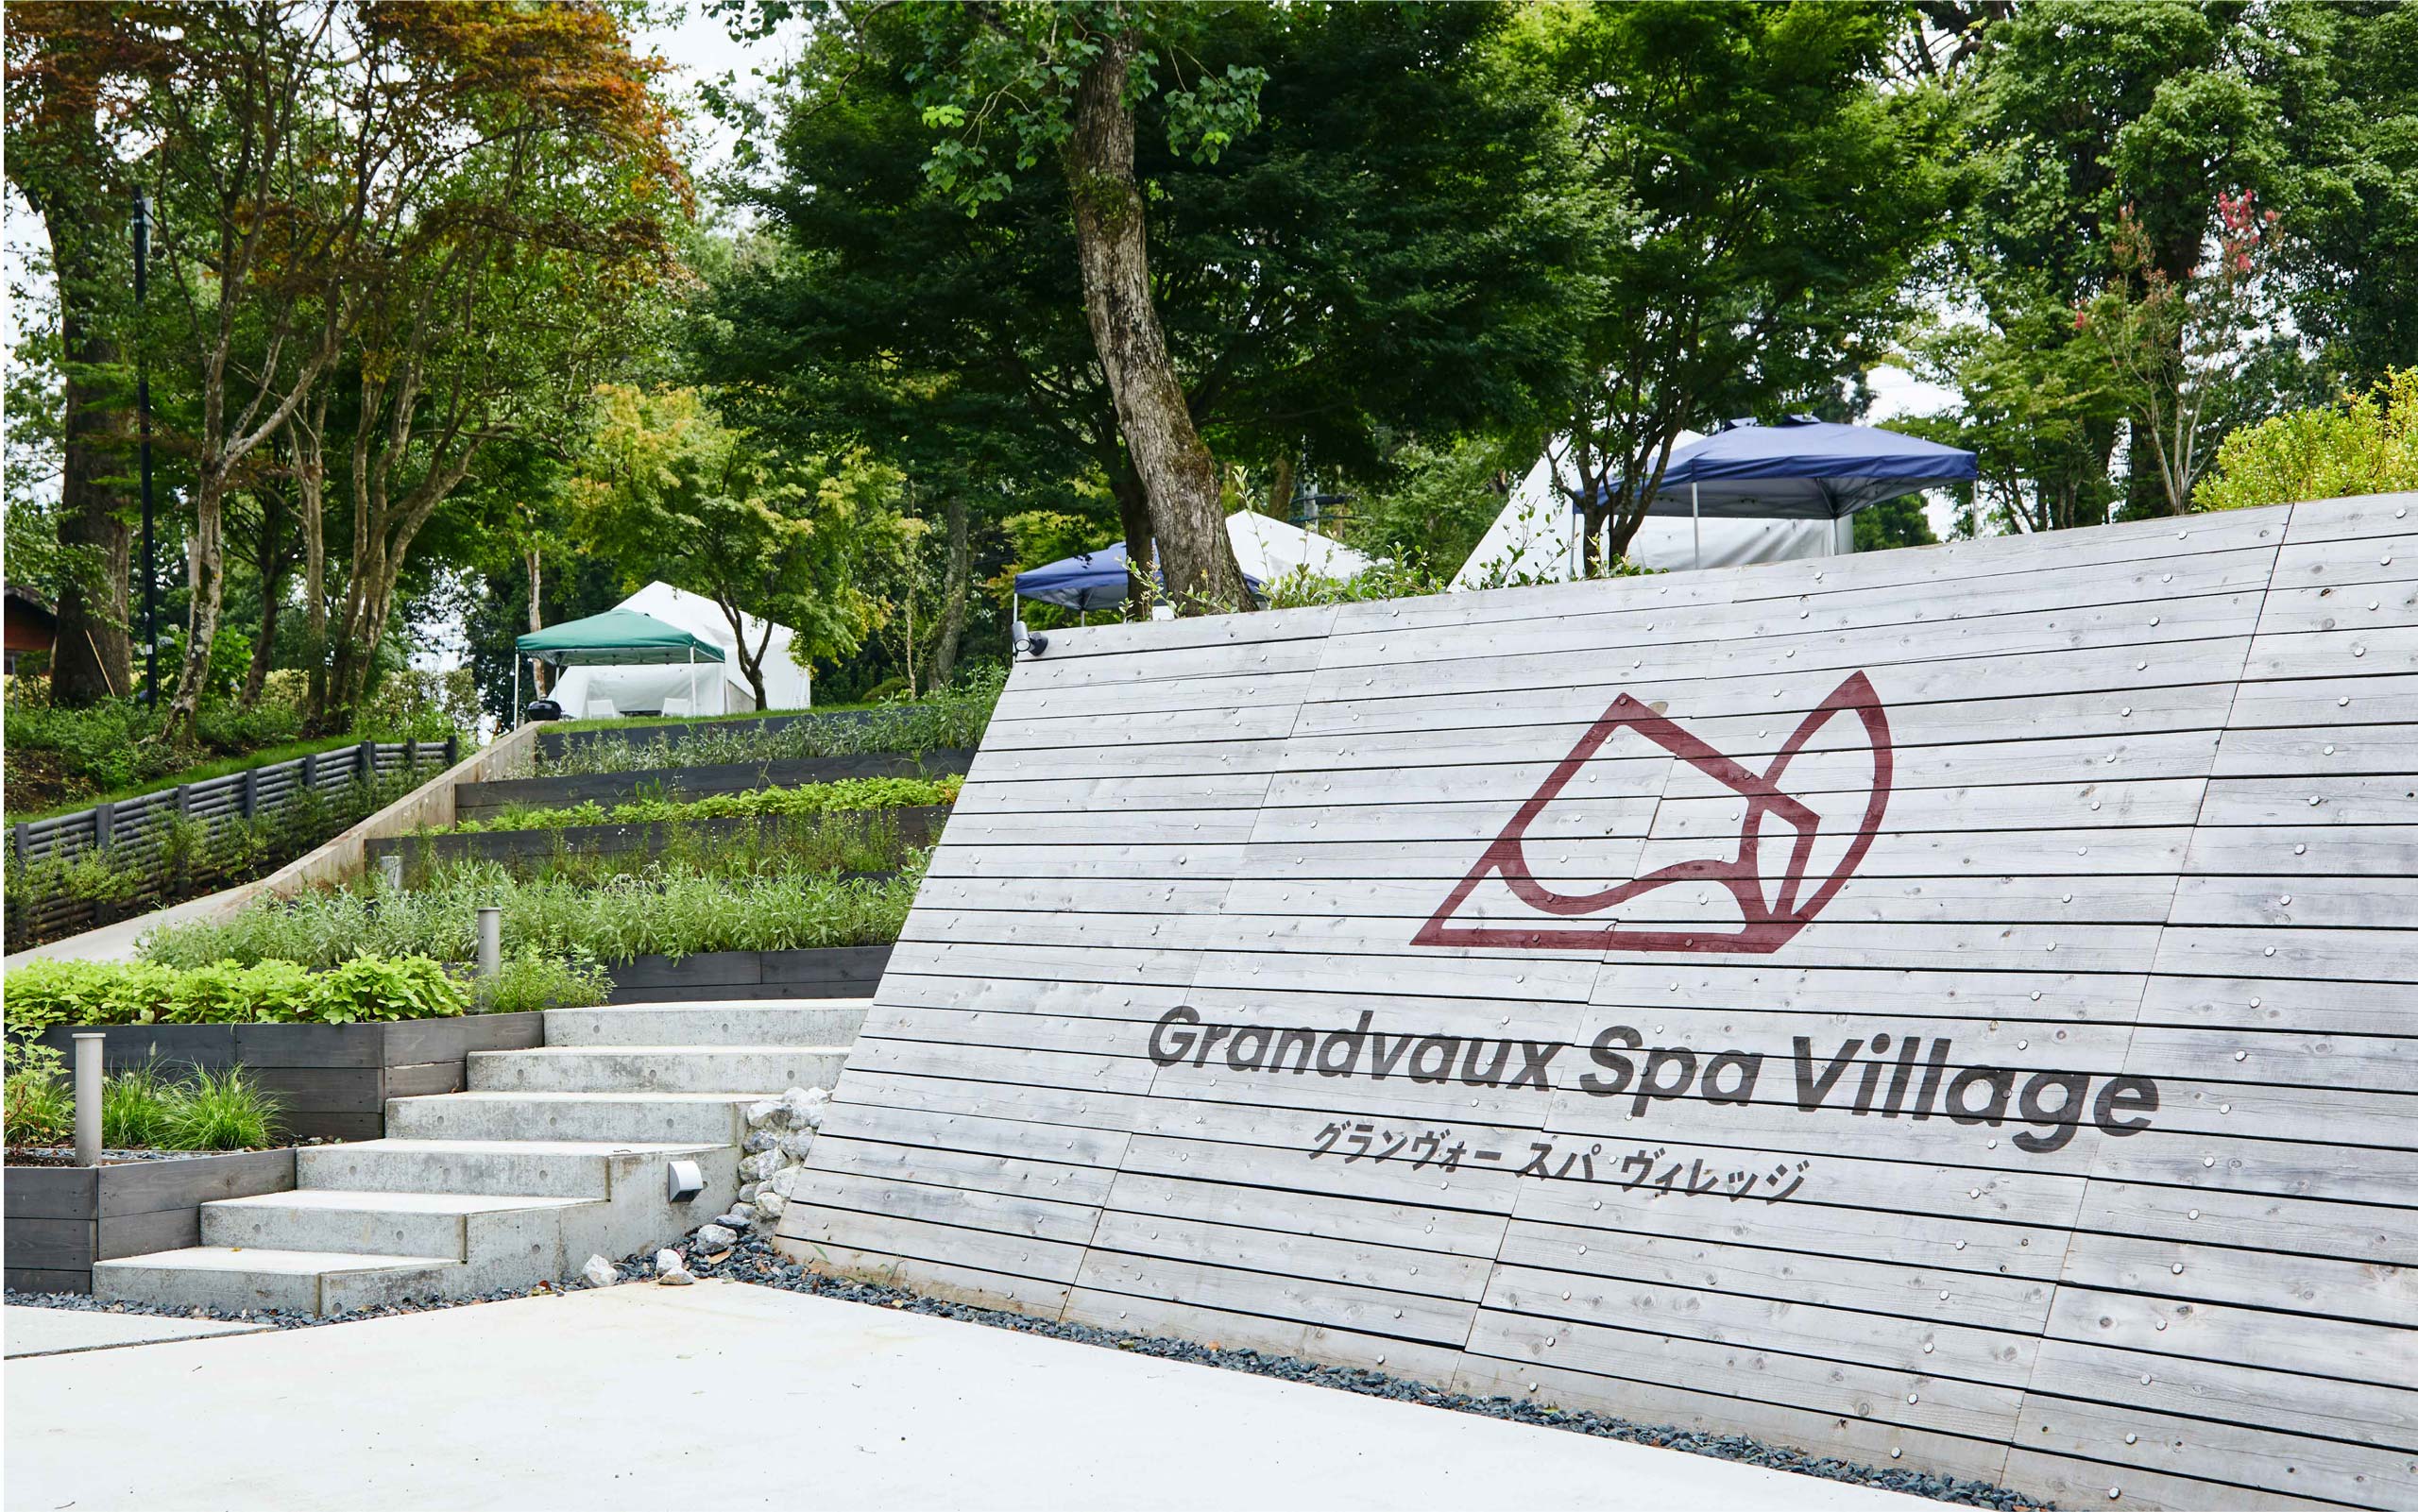 sign Grandvaux Spa Village 2020